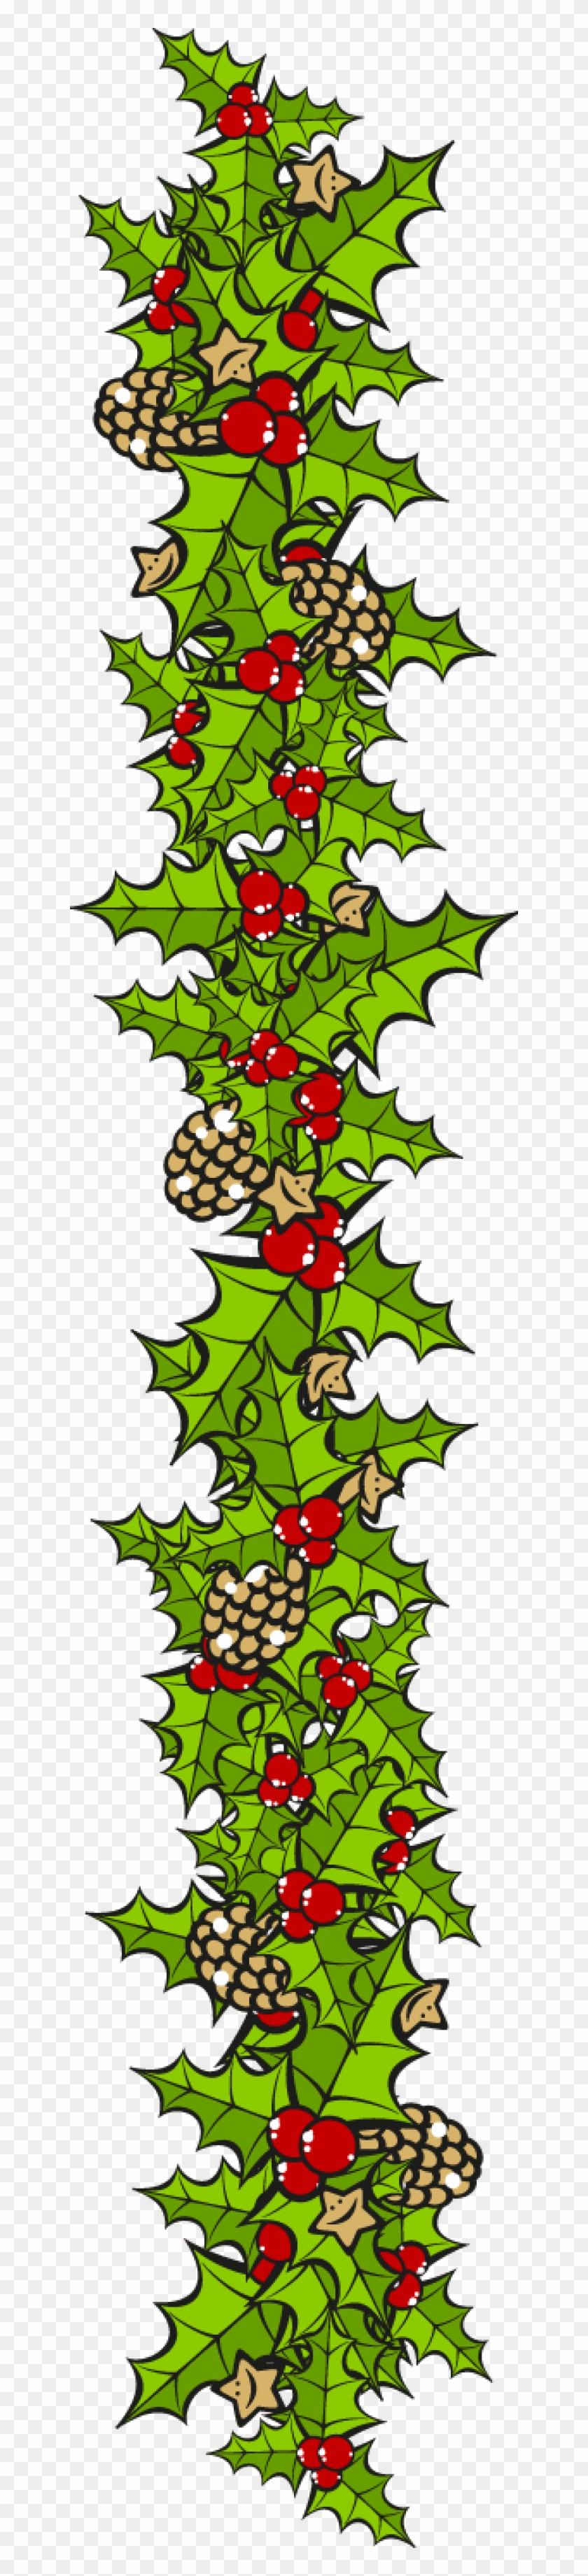 Clip Art For The Christmas Holidays - Clip Art #1002743